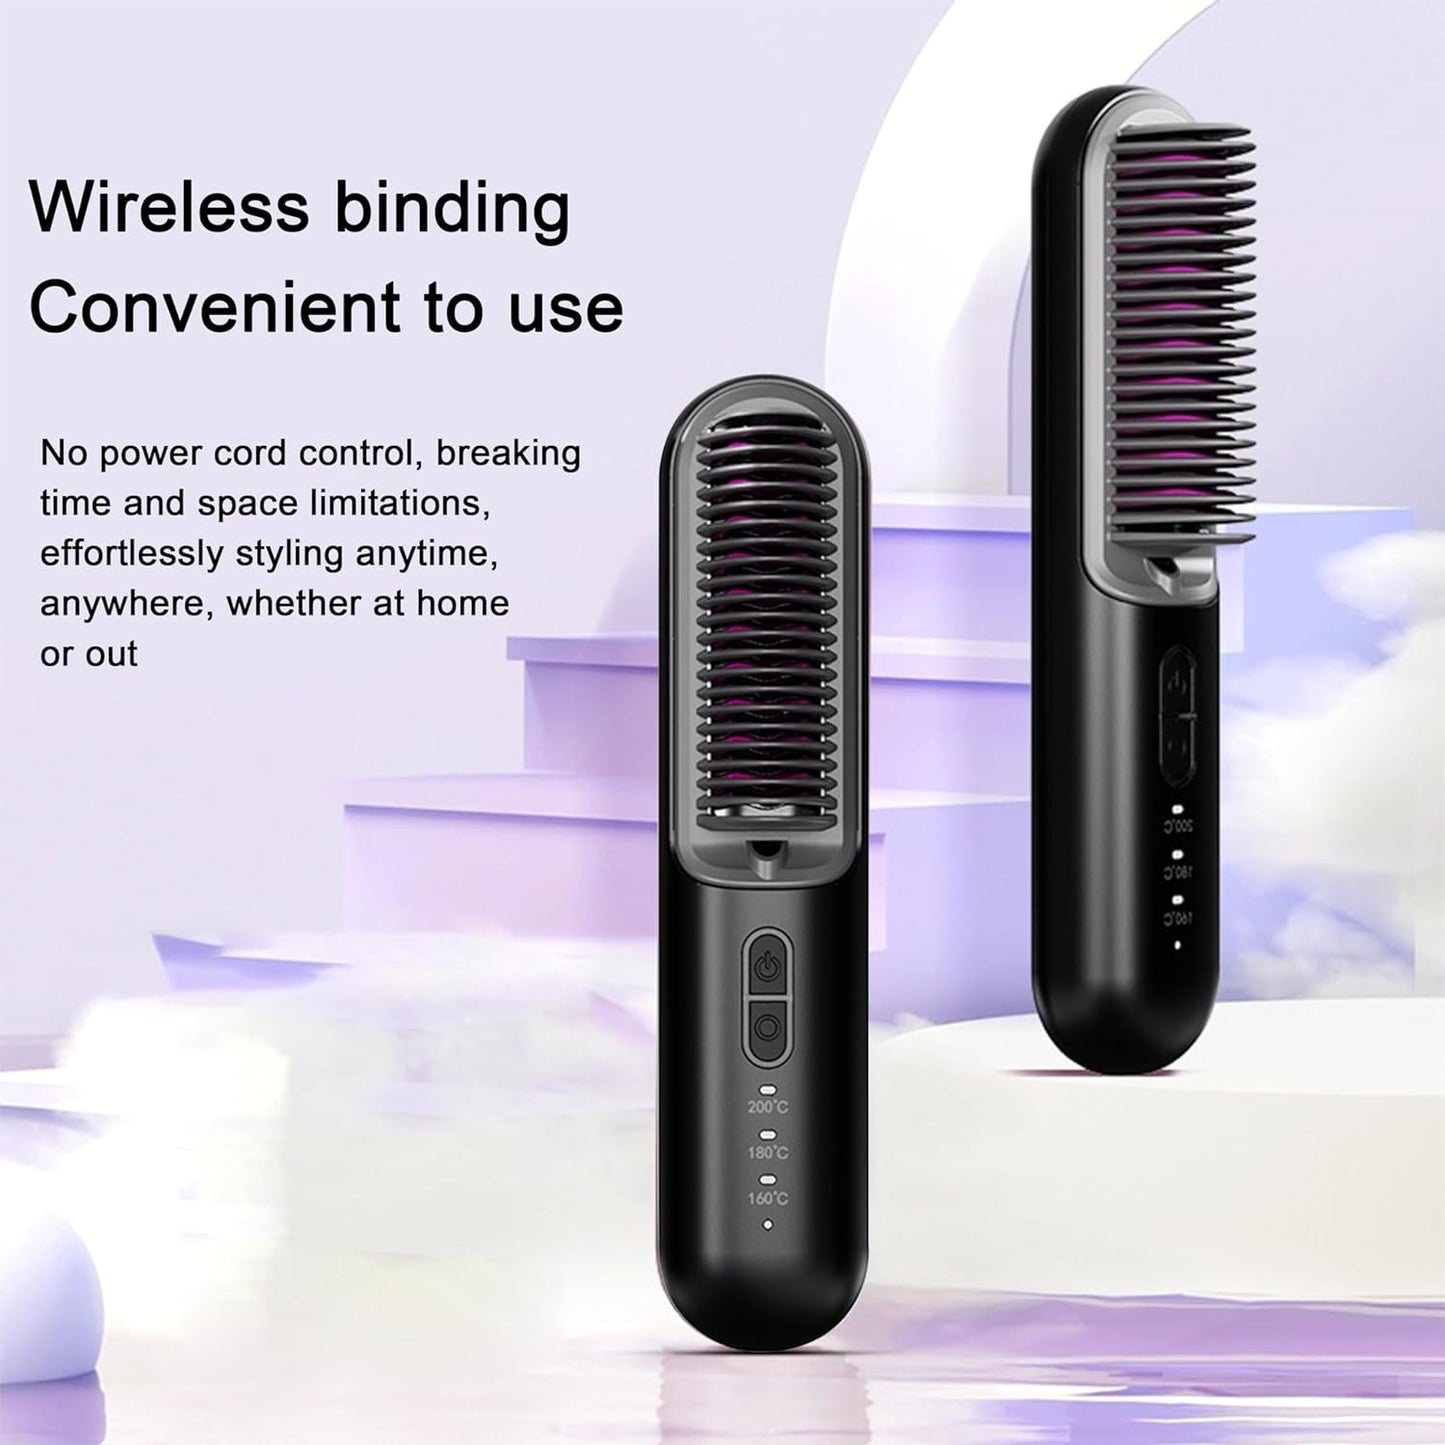 Portable cordless Hair Straightener Brush - فرشاة شعر ذكية تعمل بالشحن بتقنية الايونات